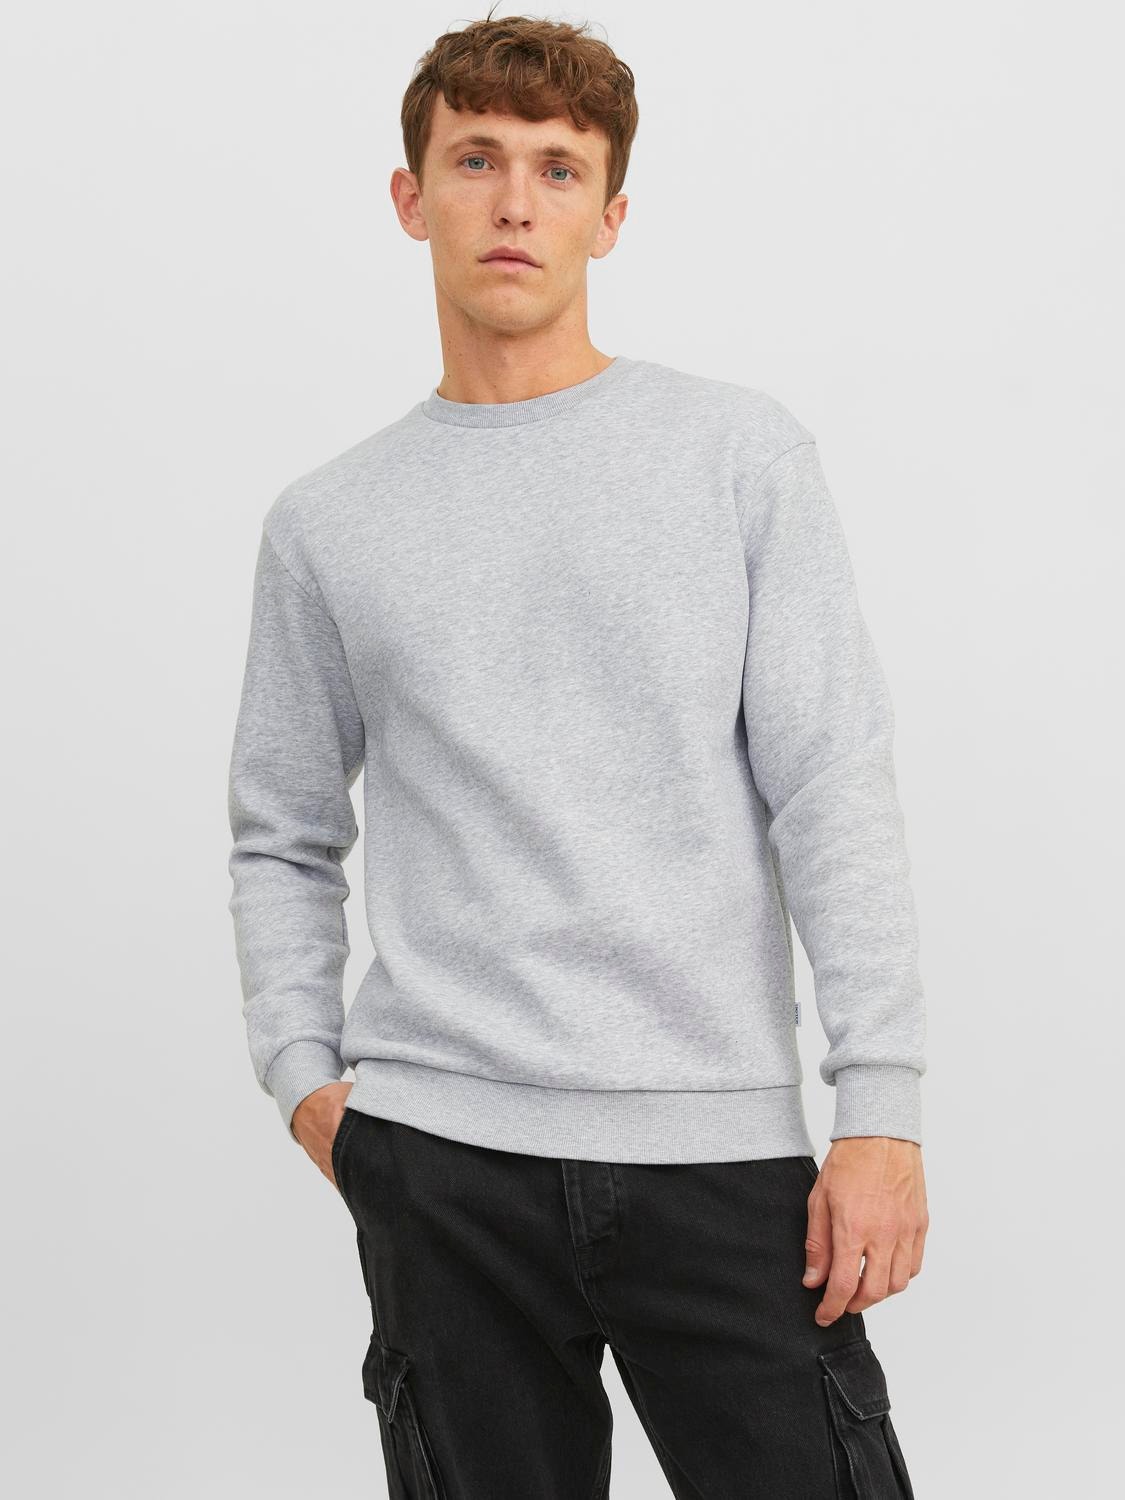 Ardene Solid Crew Neck Sweatshirt in Light Grey, Size